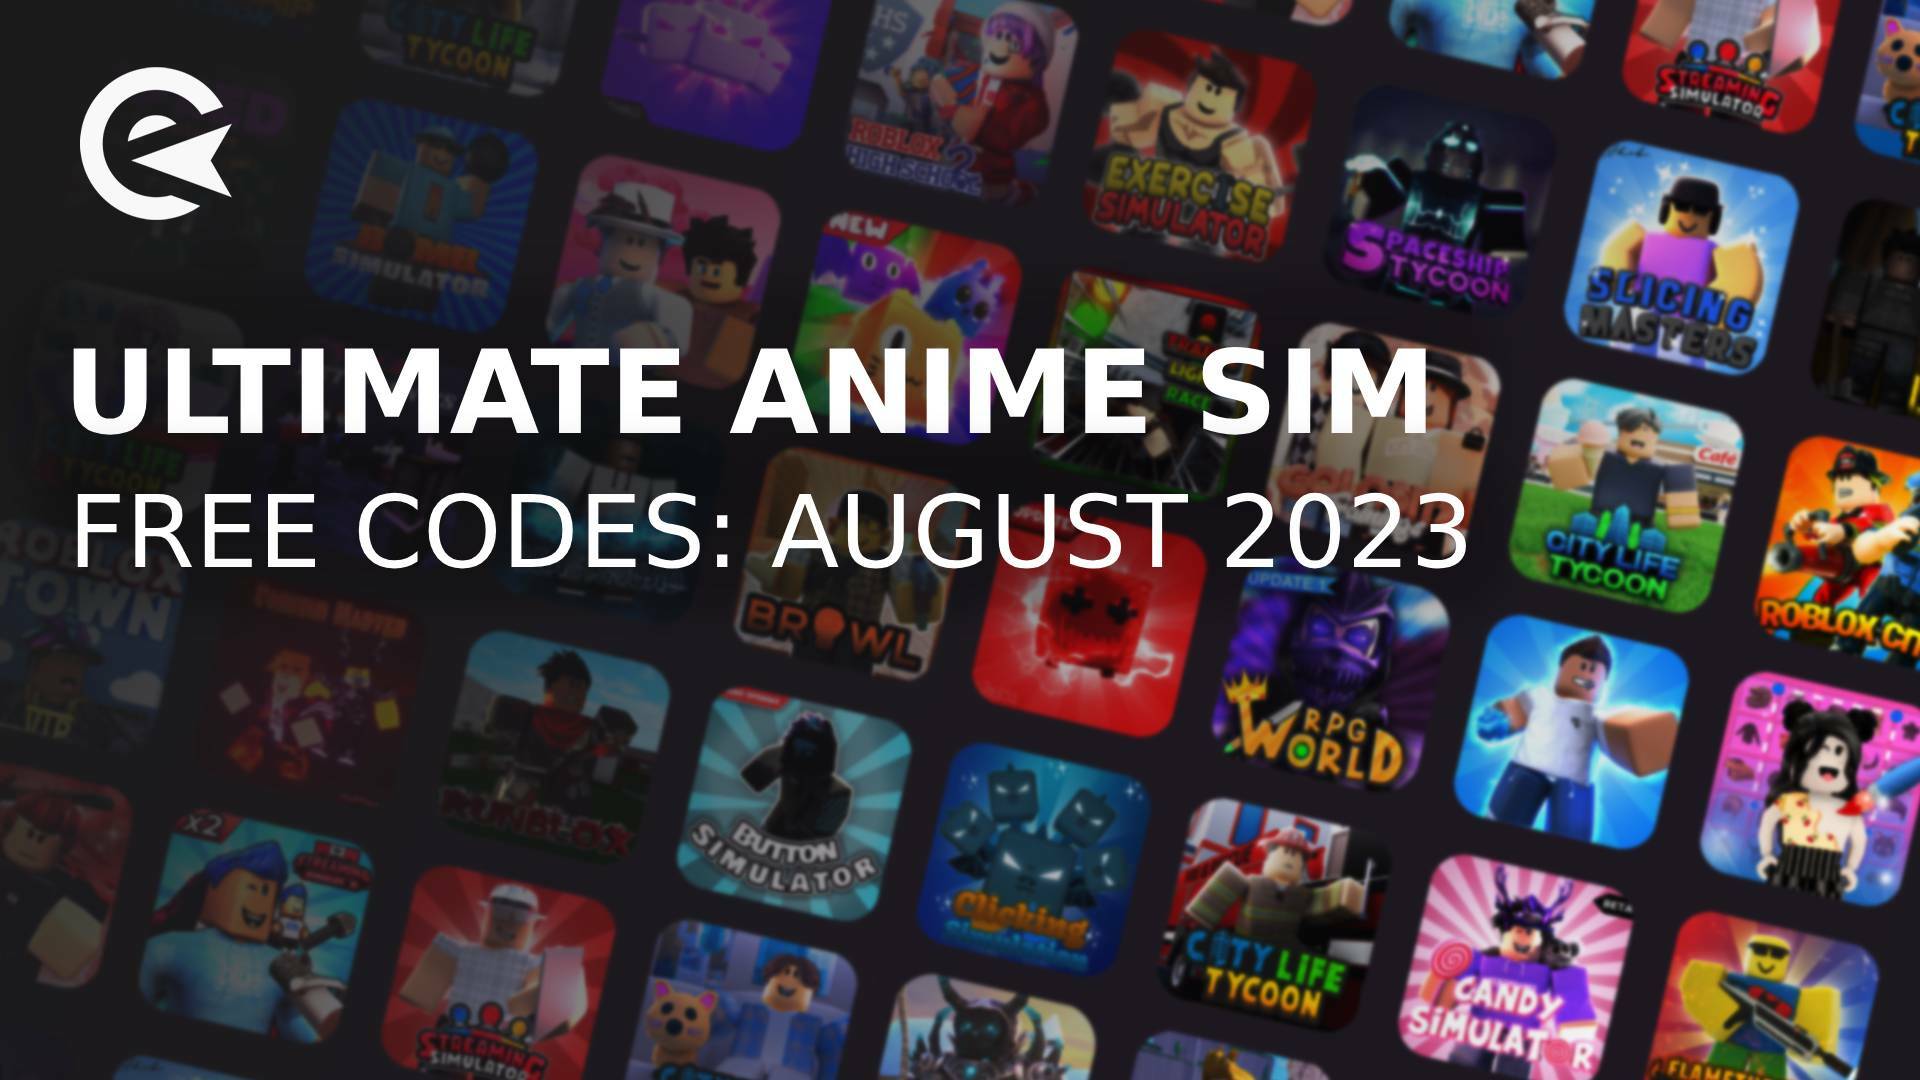 Roblox Anime Brawl All Out Codes проверено в декабре 2022 г   VotGuideru